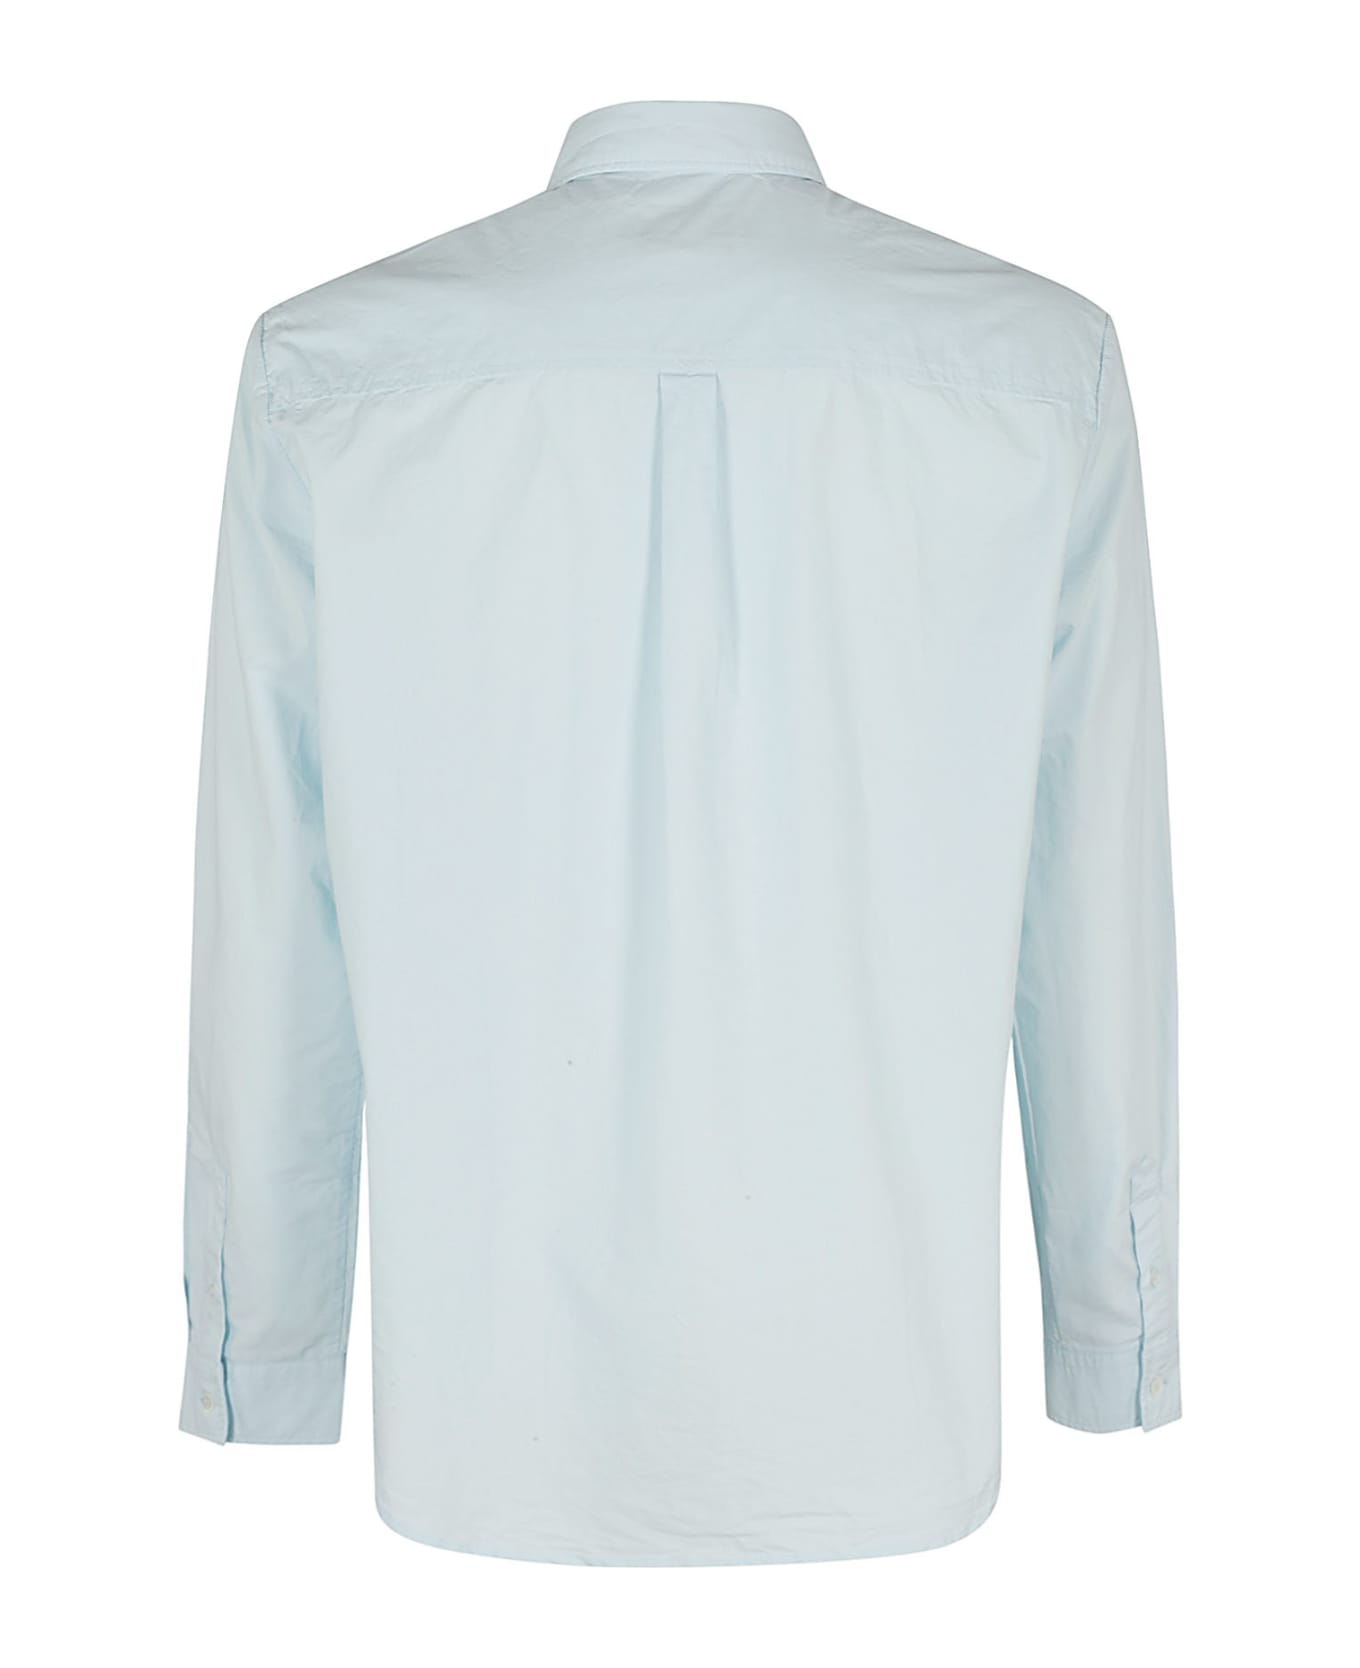 A.P.C. Chemise Clement Shirt - Iav Pale Blu シャツ